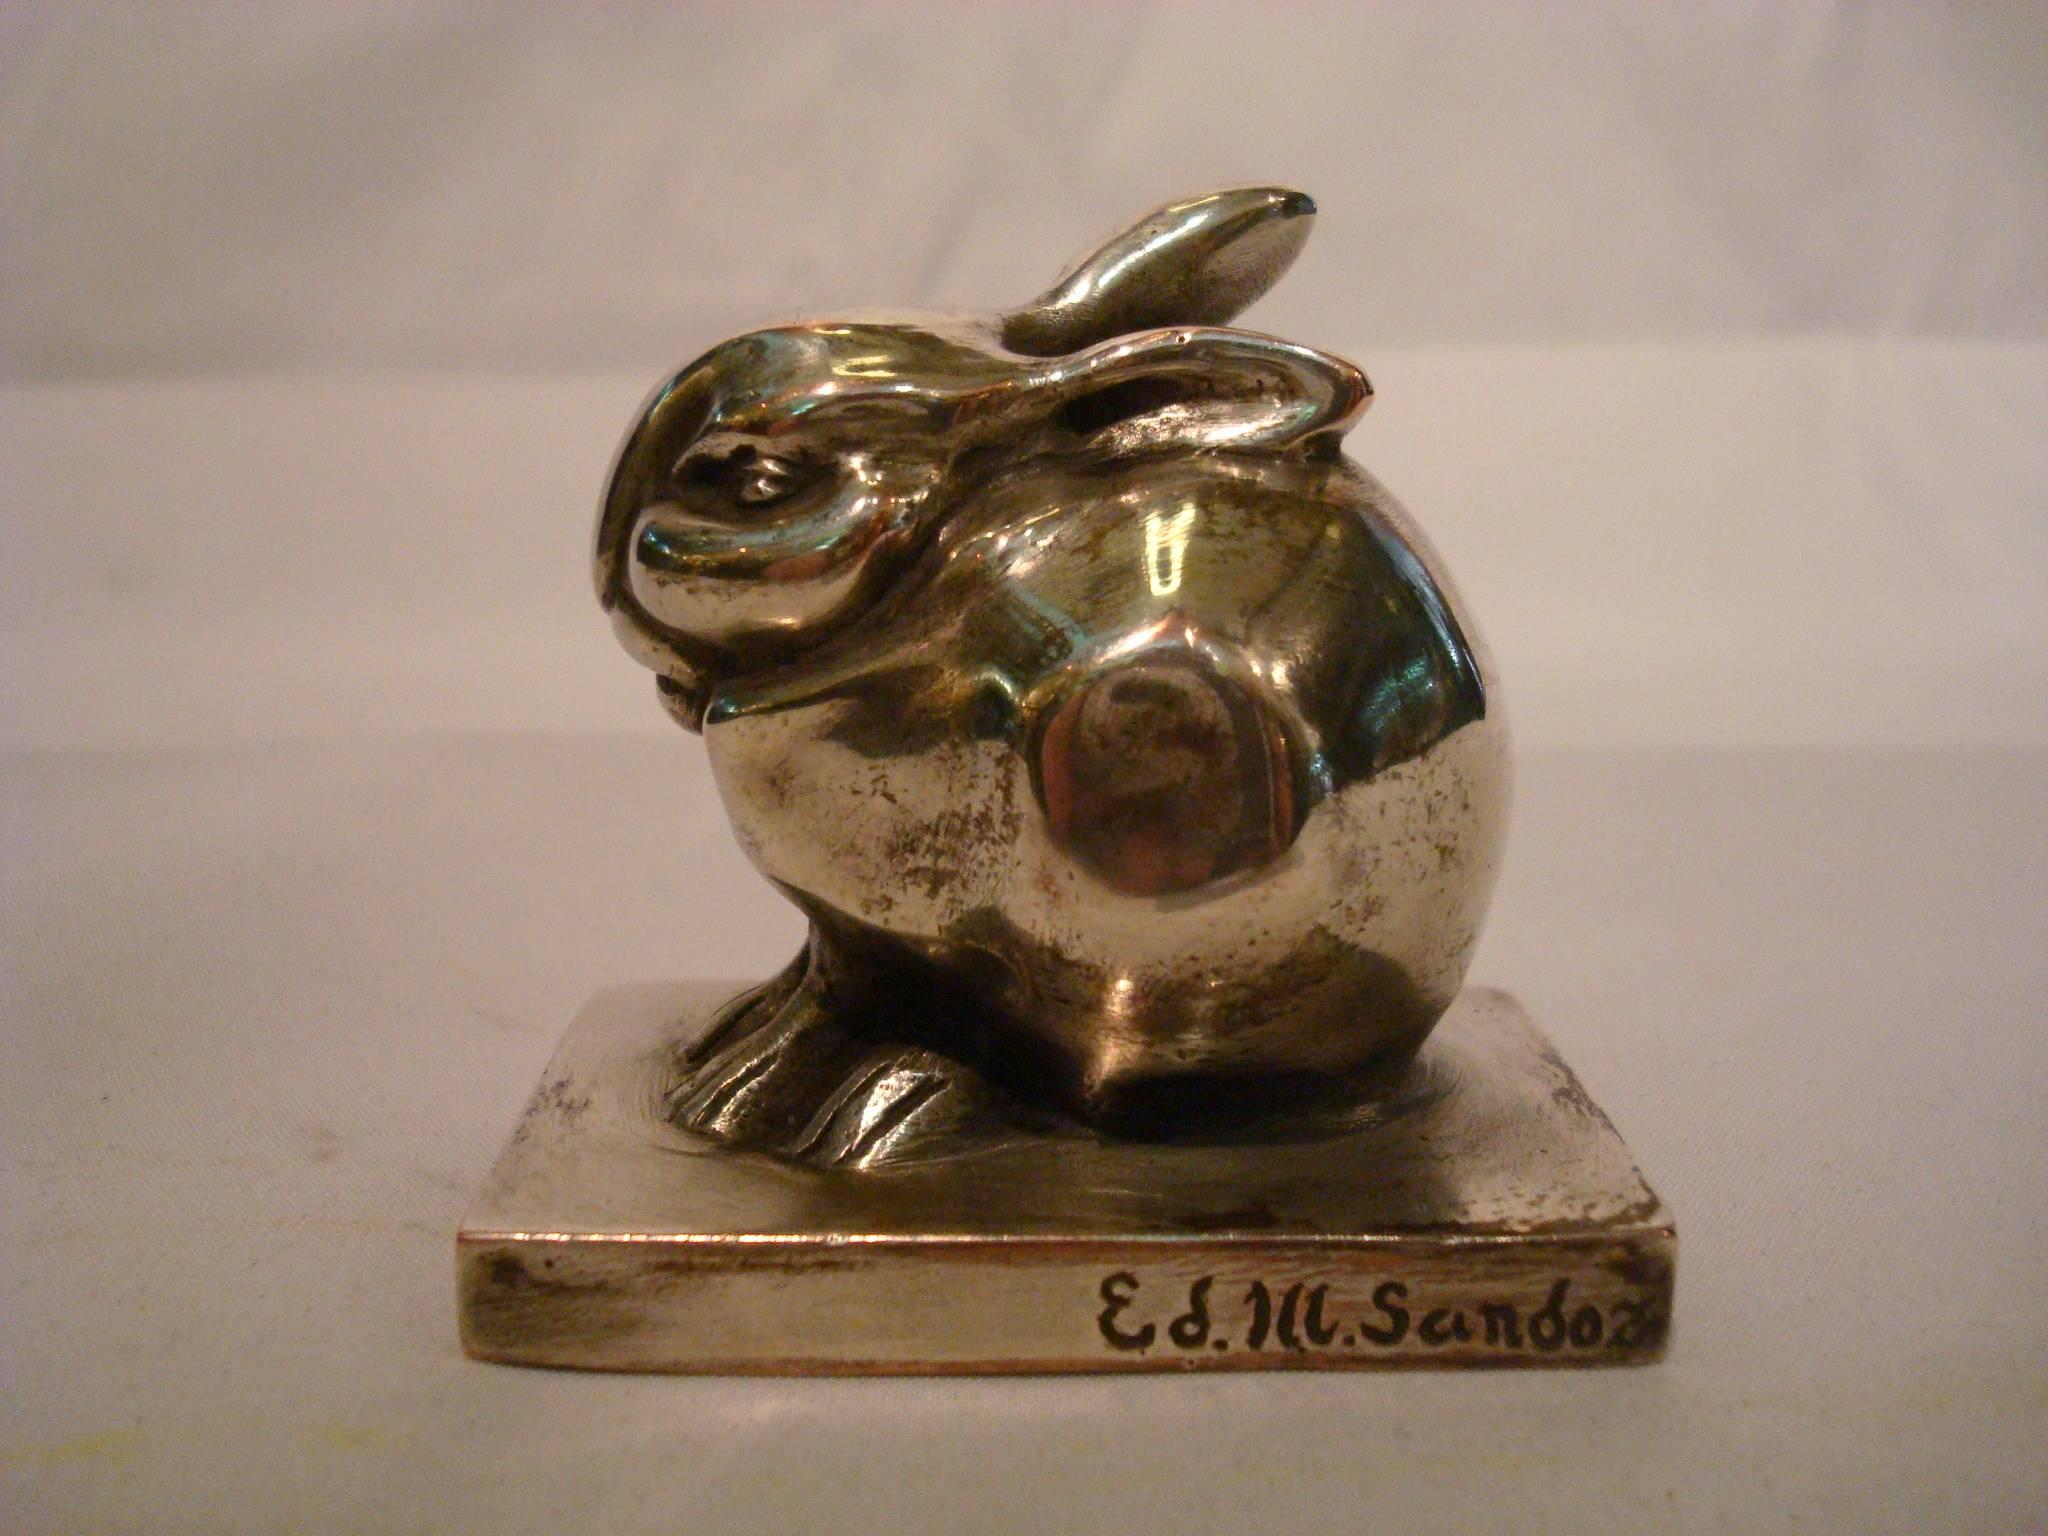 Early 20th Century Art Deco Edouard Marcel Sandoz Little Silvered Bronze Lapin, Rabbit, Signed